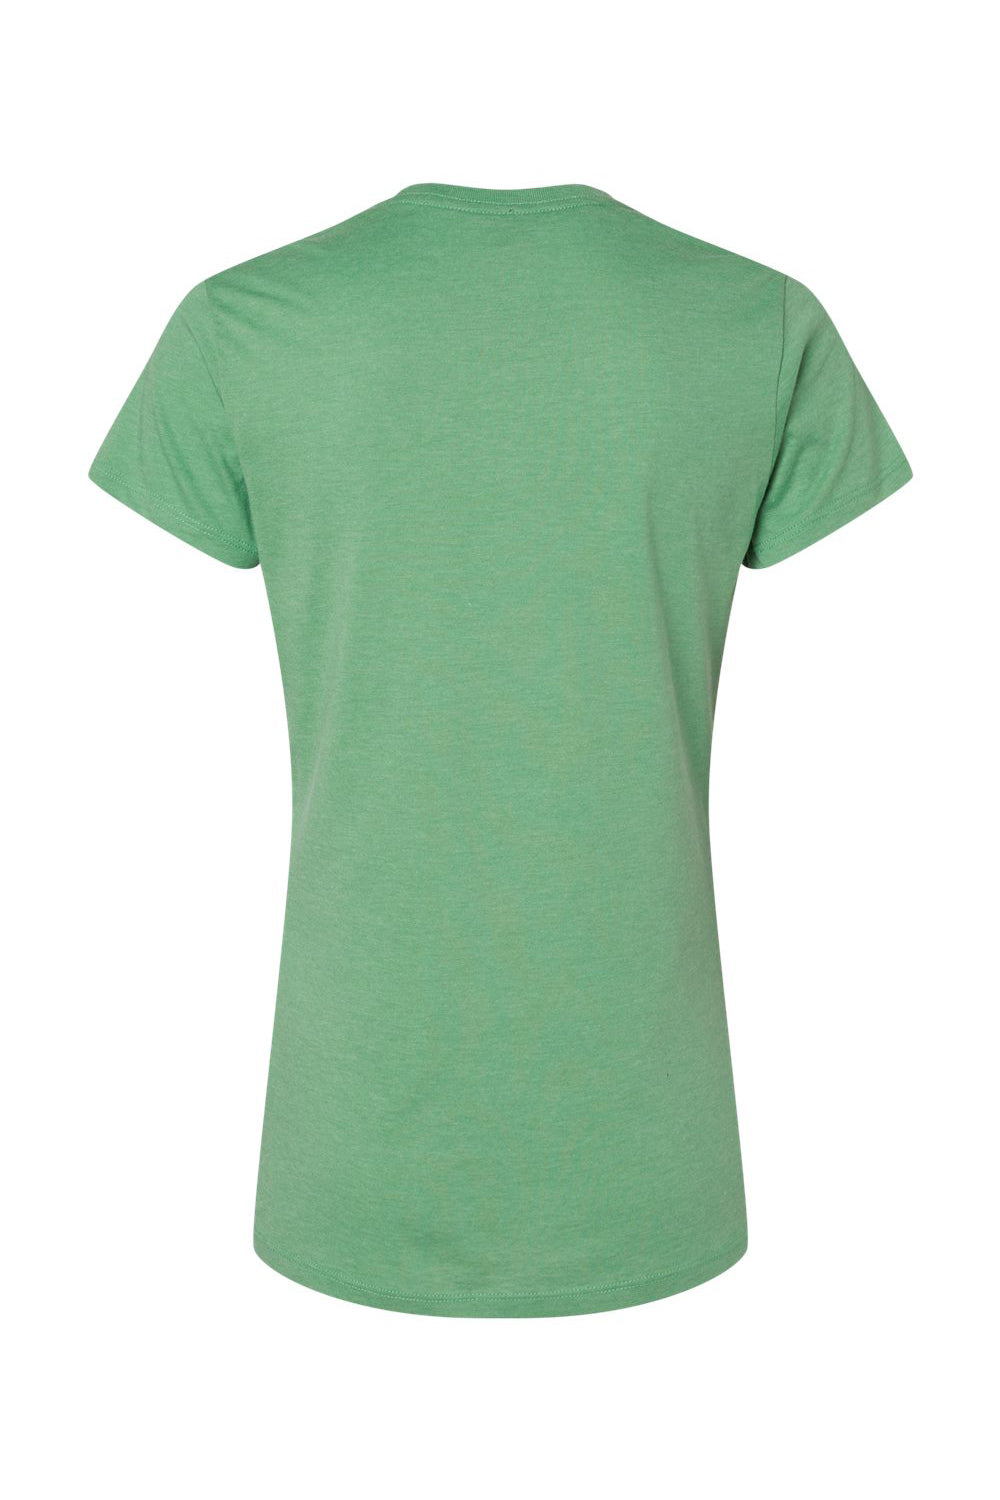 Kastlfel 2021 Womens RecycledSoft Short Sleeve Crewneck T-Shirt Green Flat Back